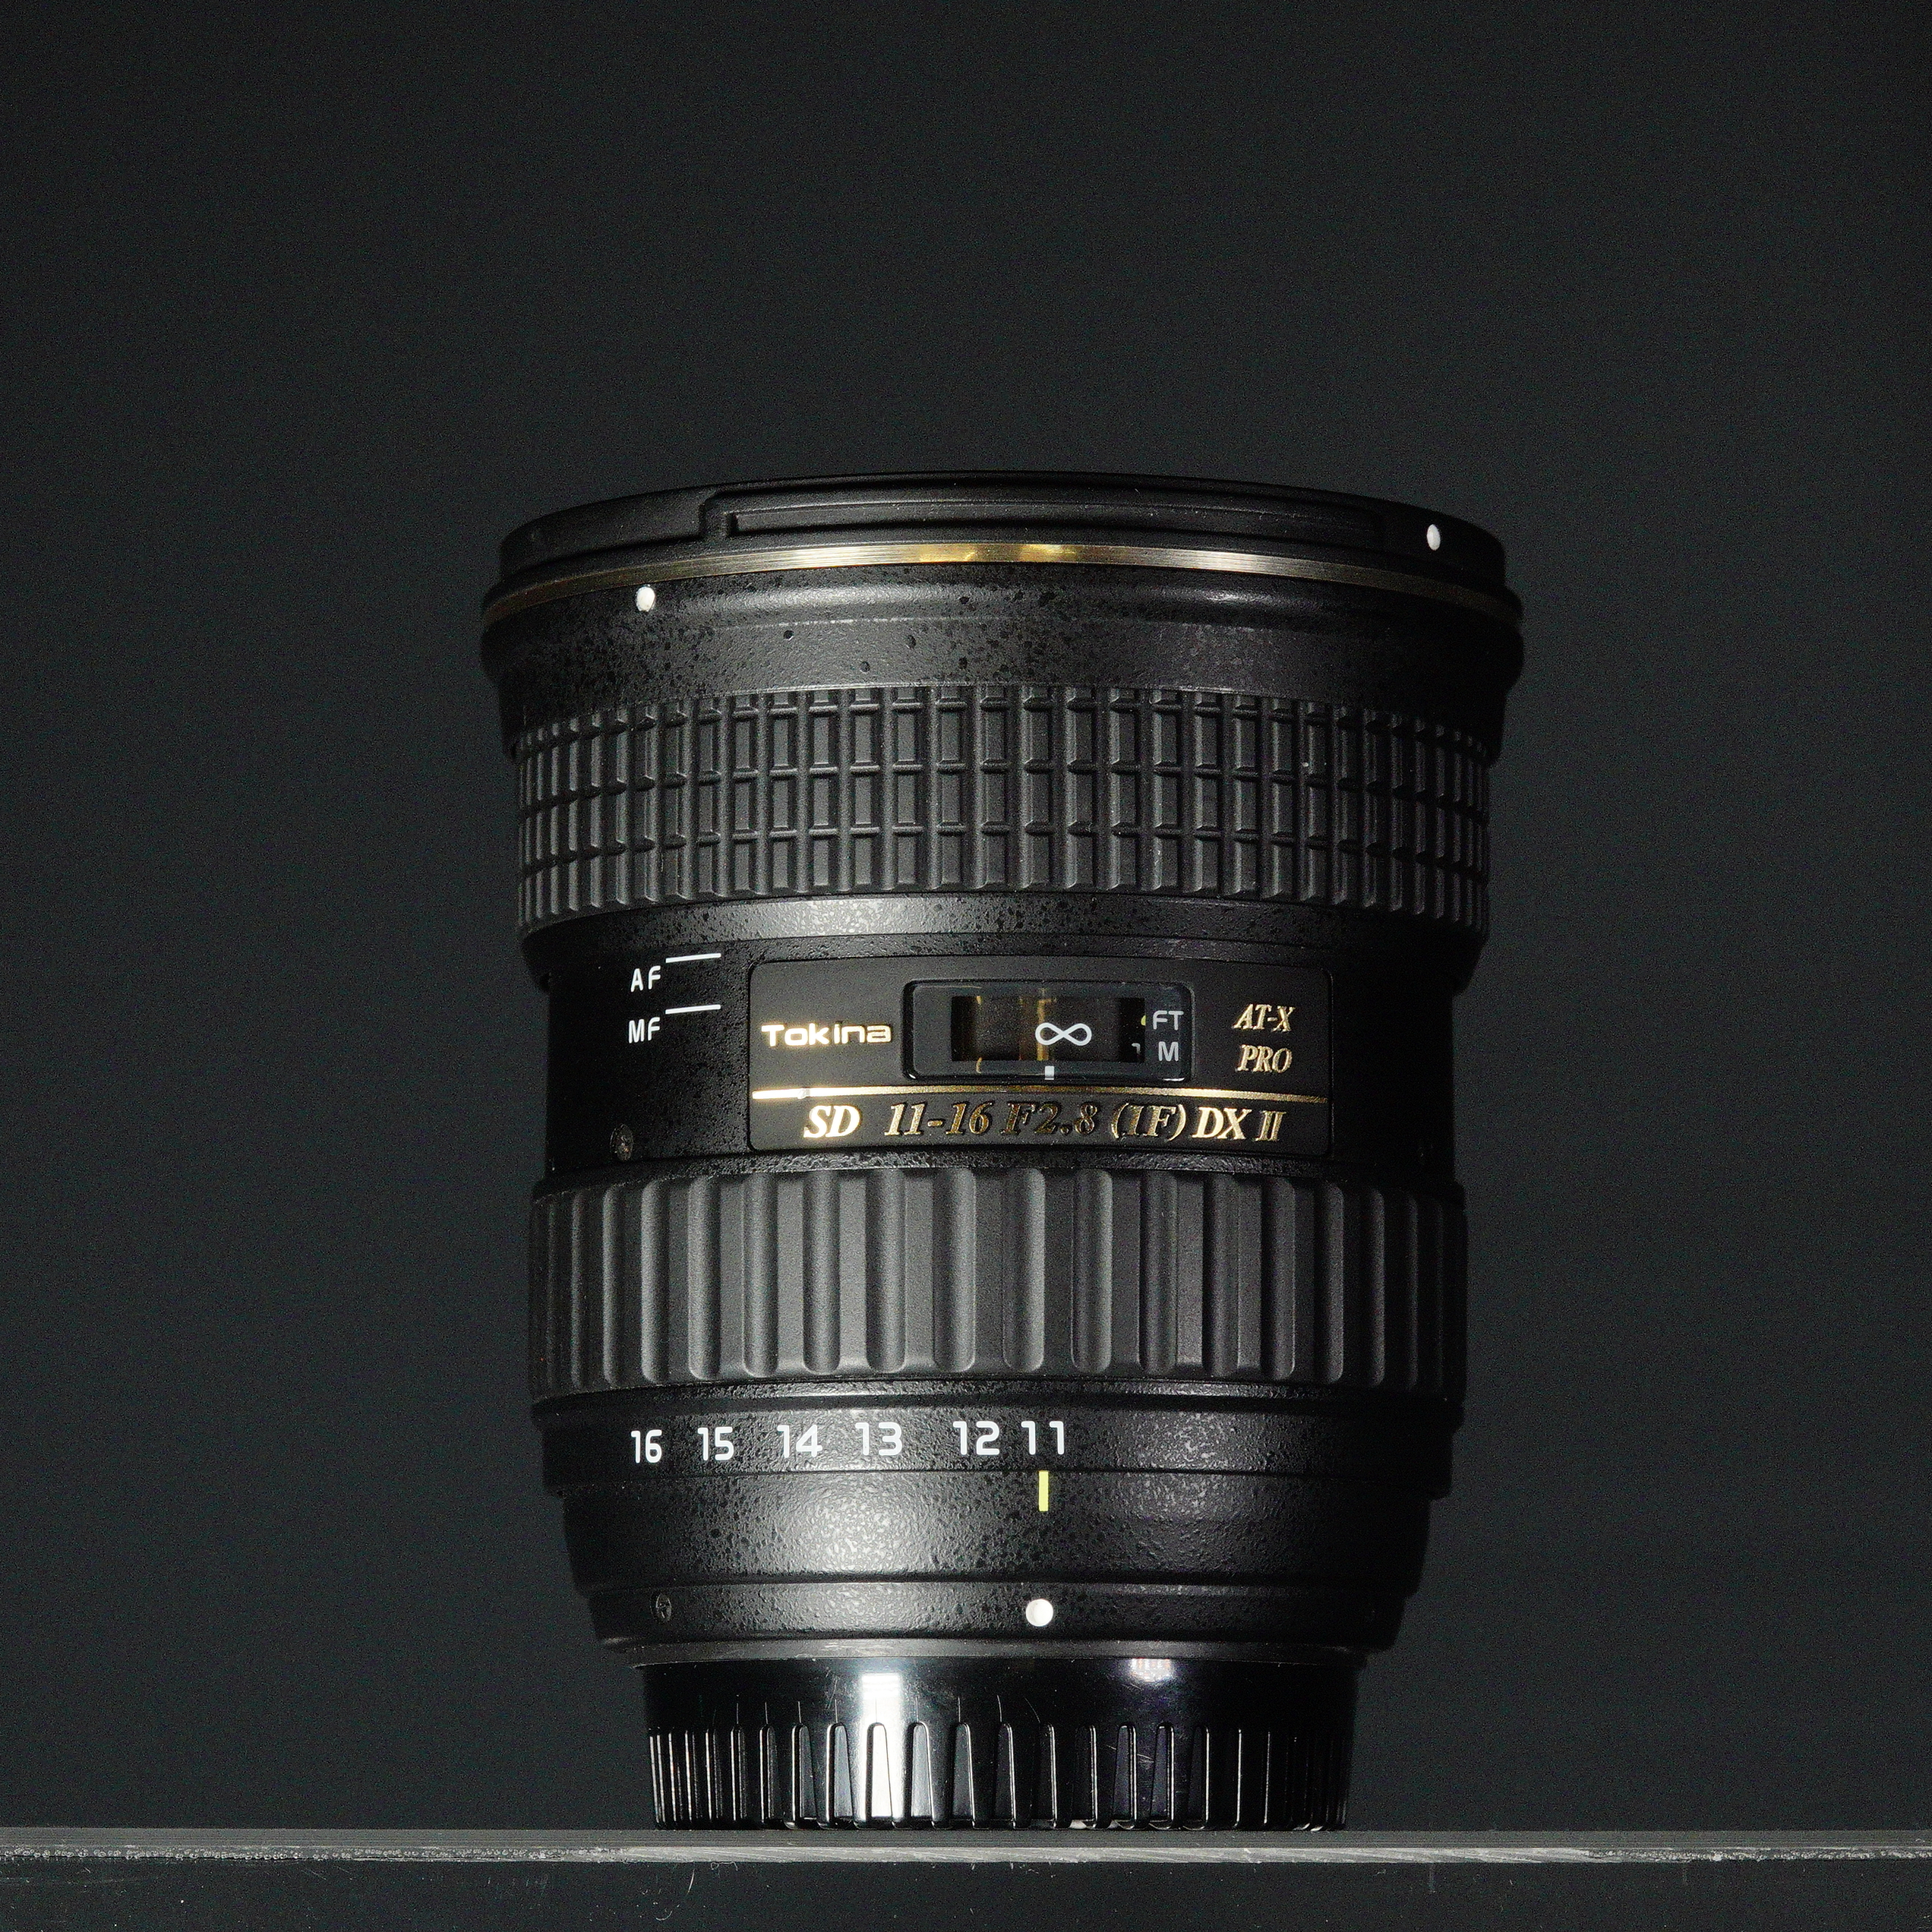 Tokina AT-X DX-II 11-16mm f/2.8 montura Nikon - Usado